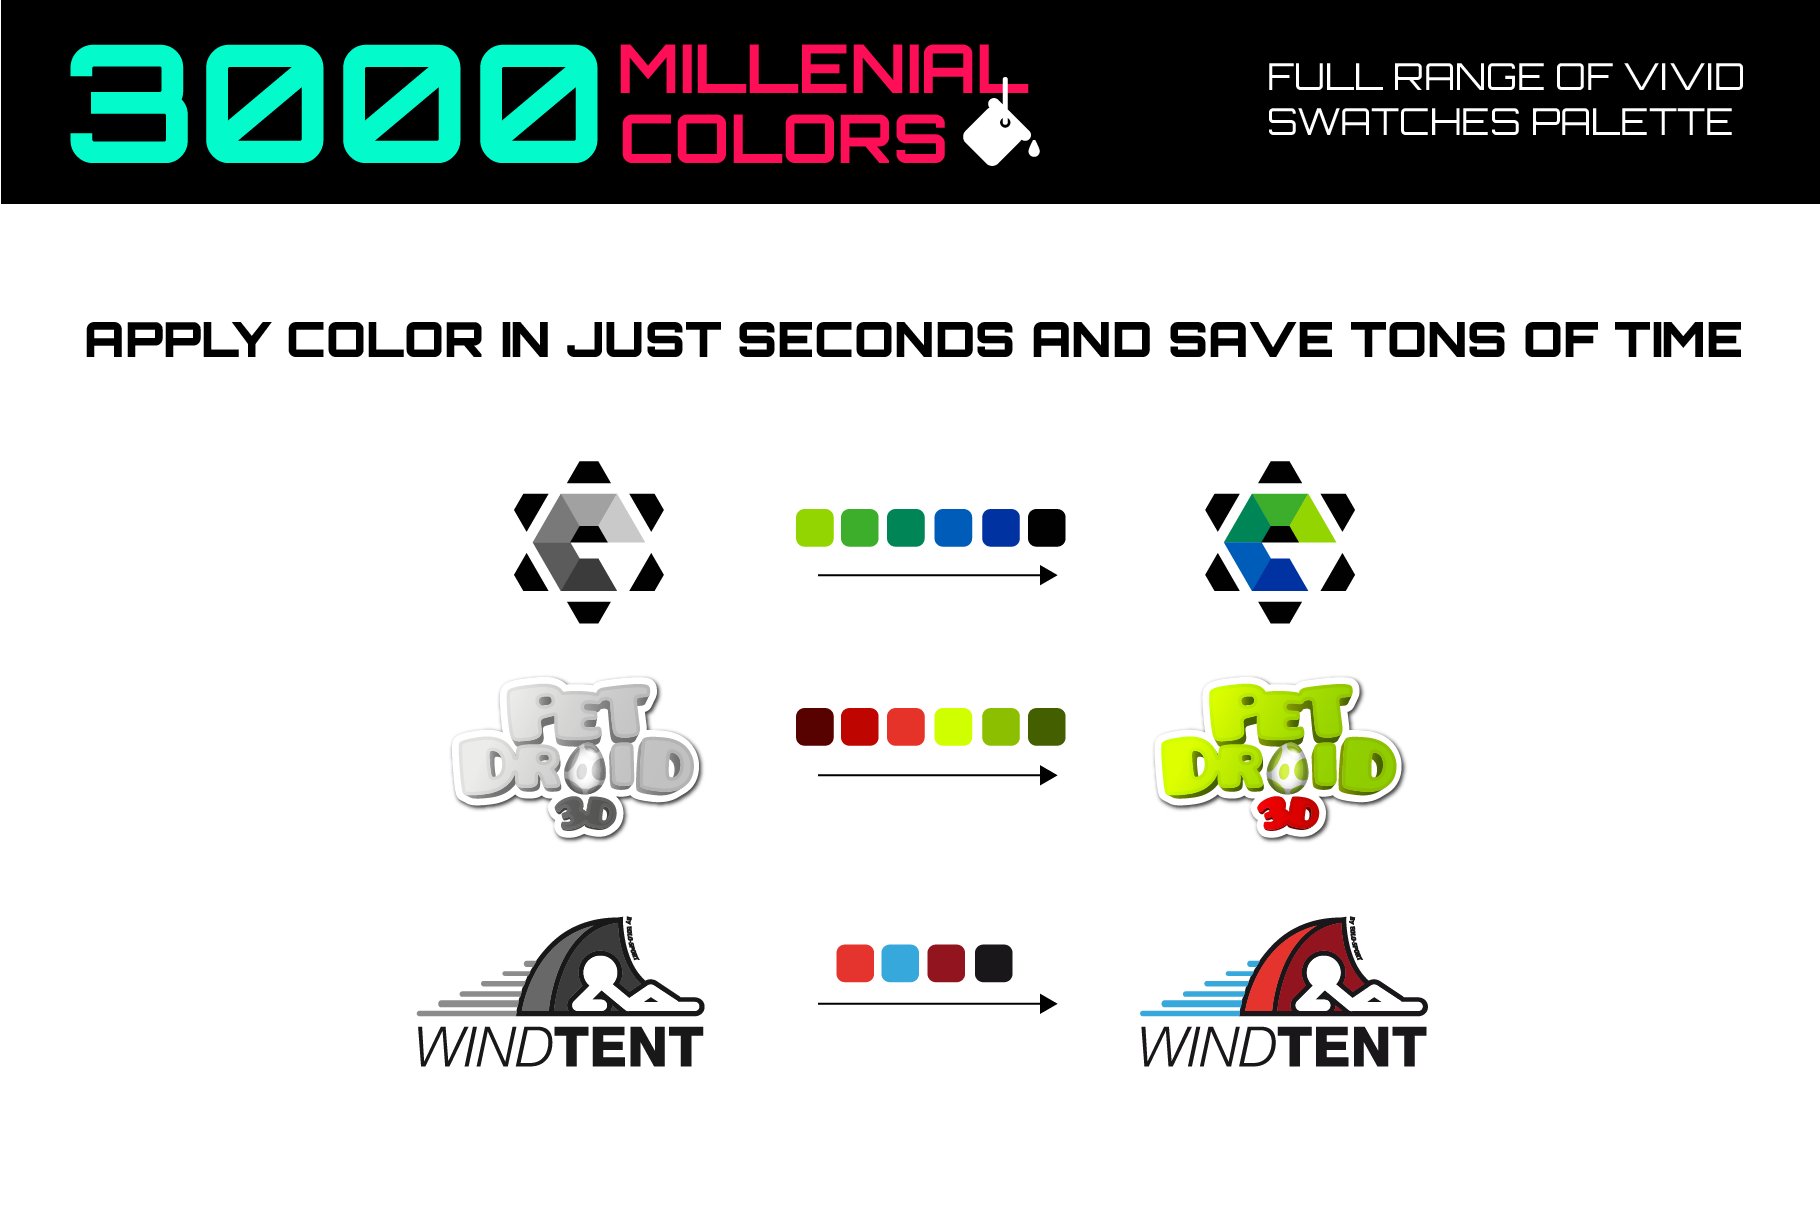 colorswatches 3000millenialcolors 01 06 logos 561